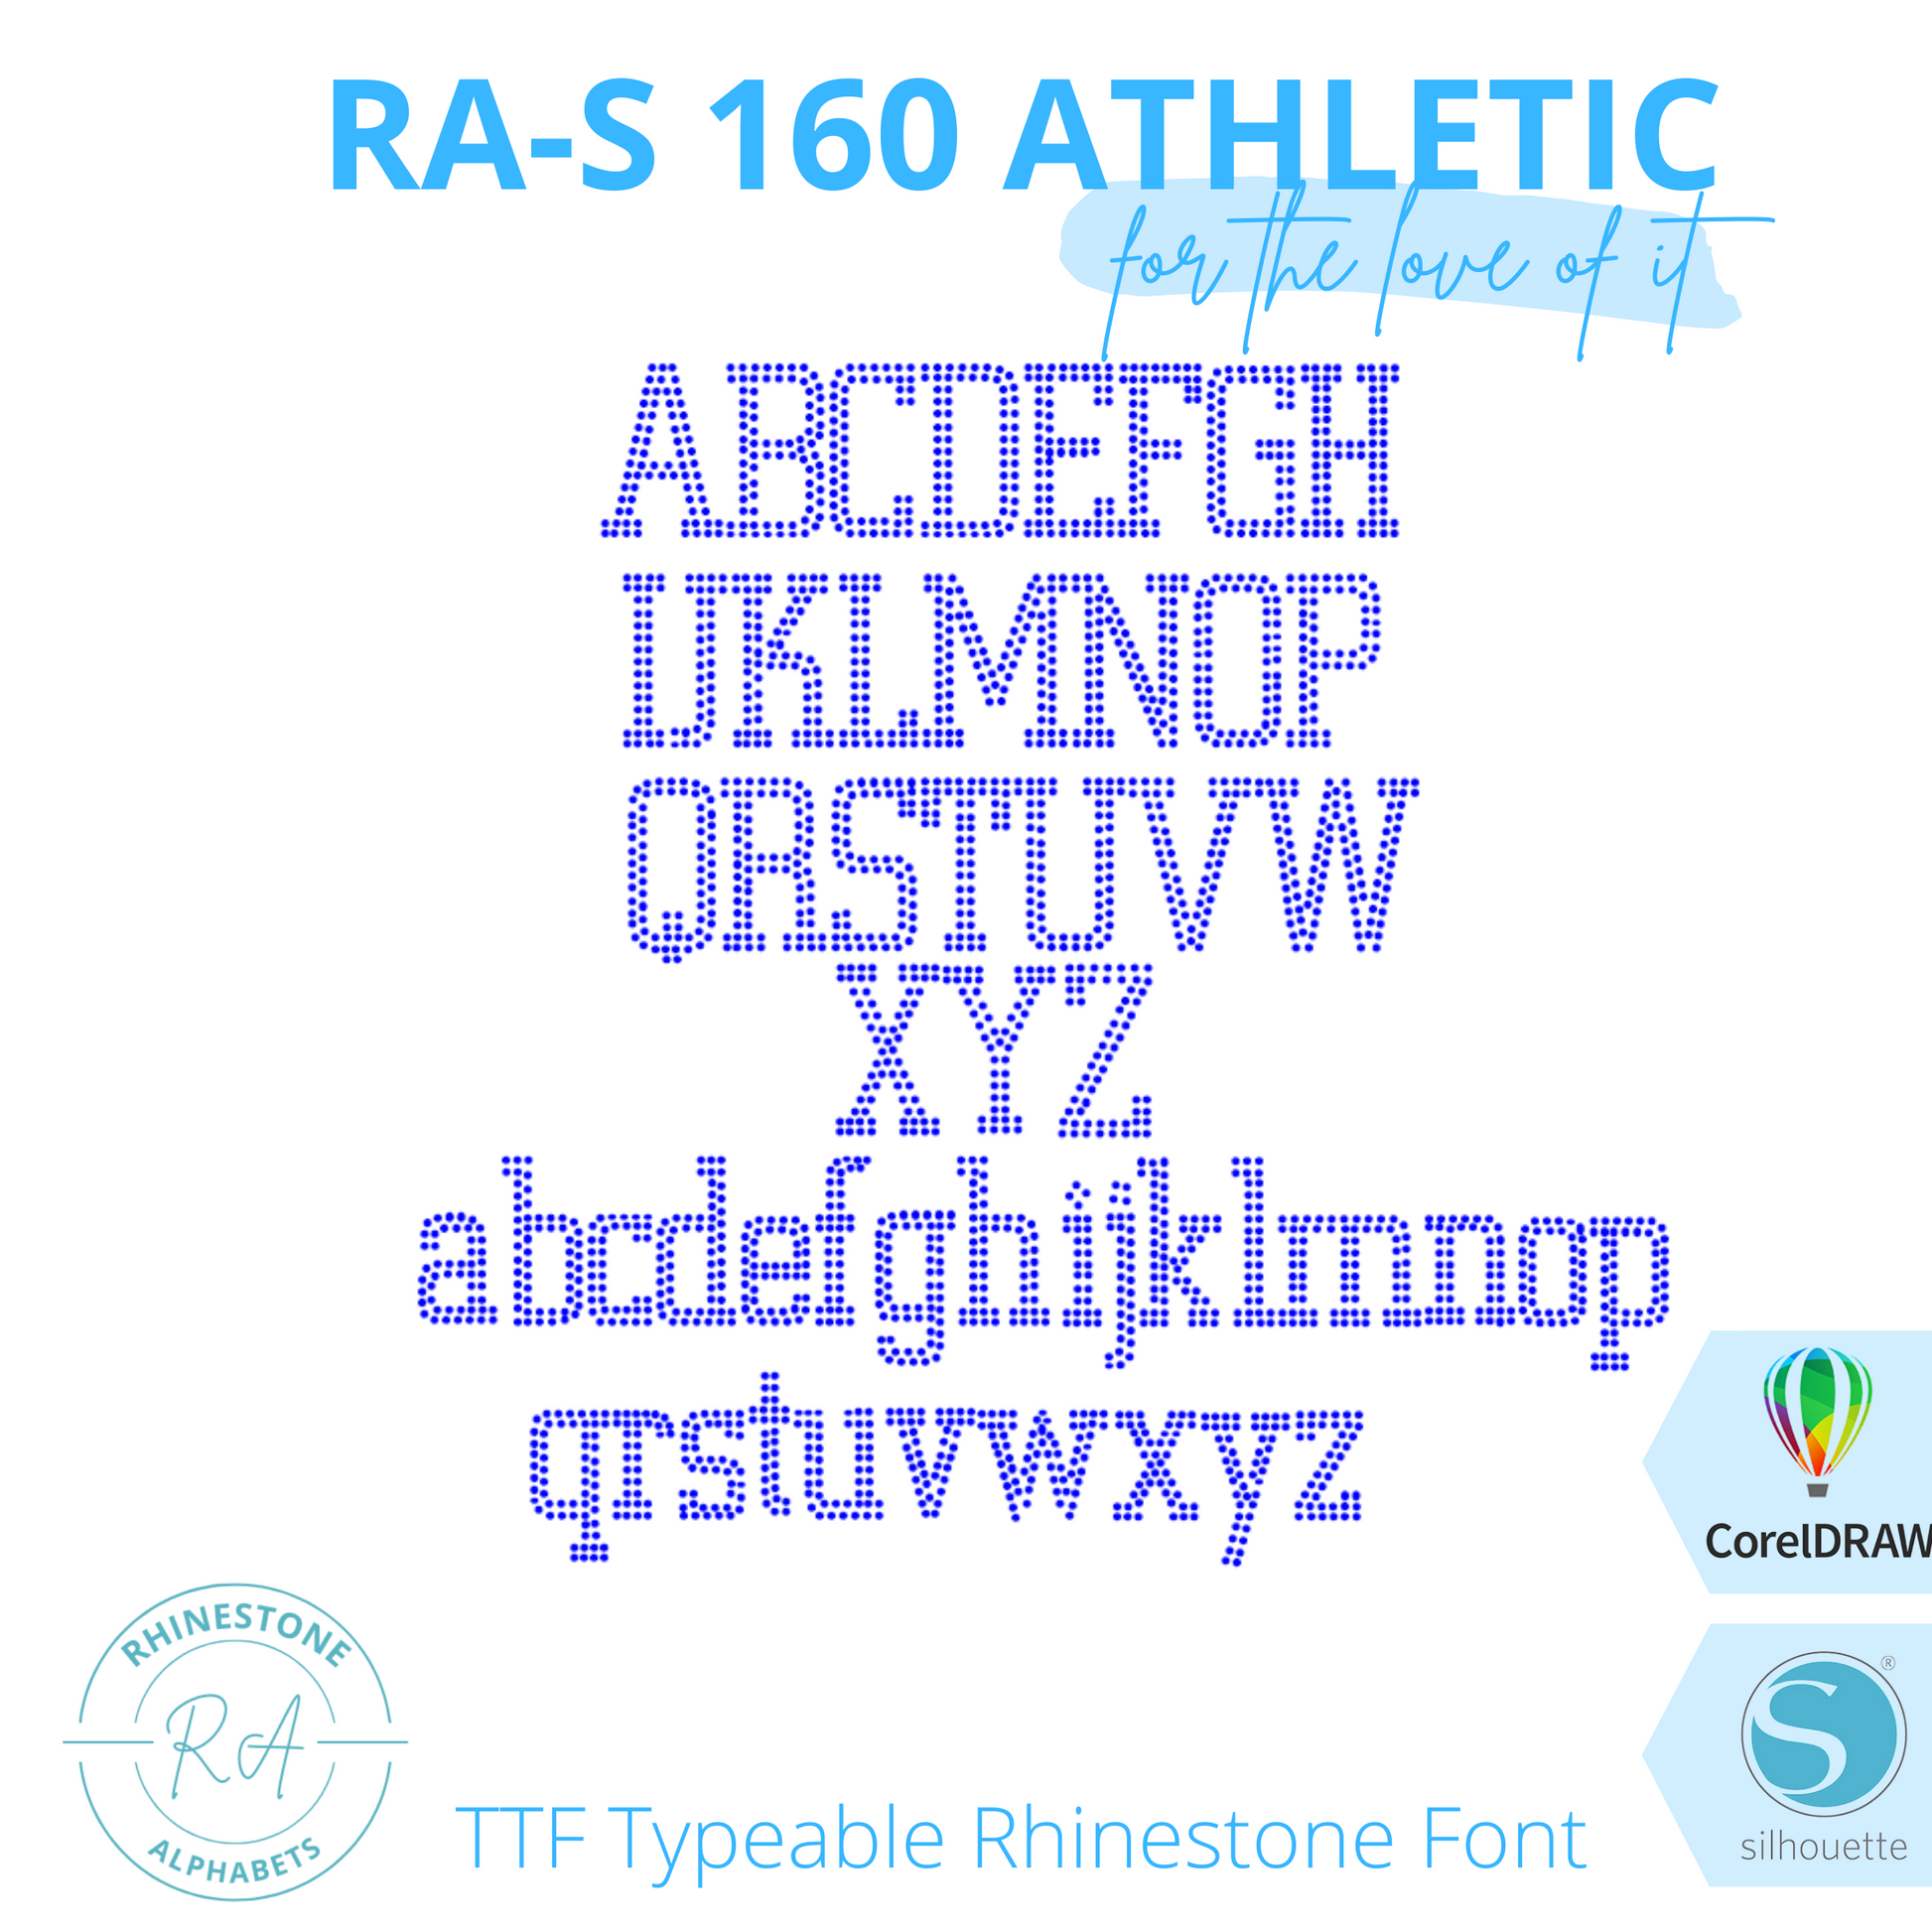 RA-S 160 Athletic - RhinestoneAlphabets